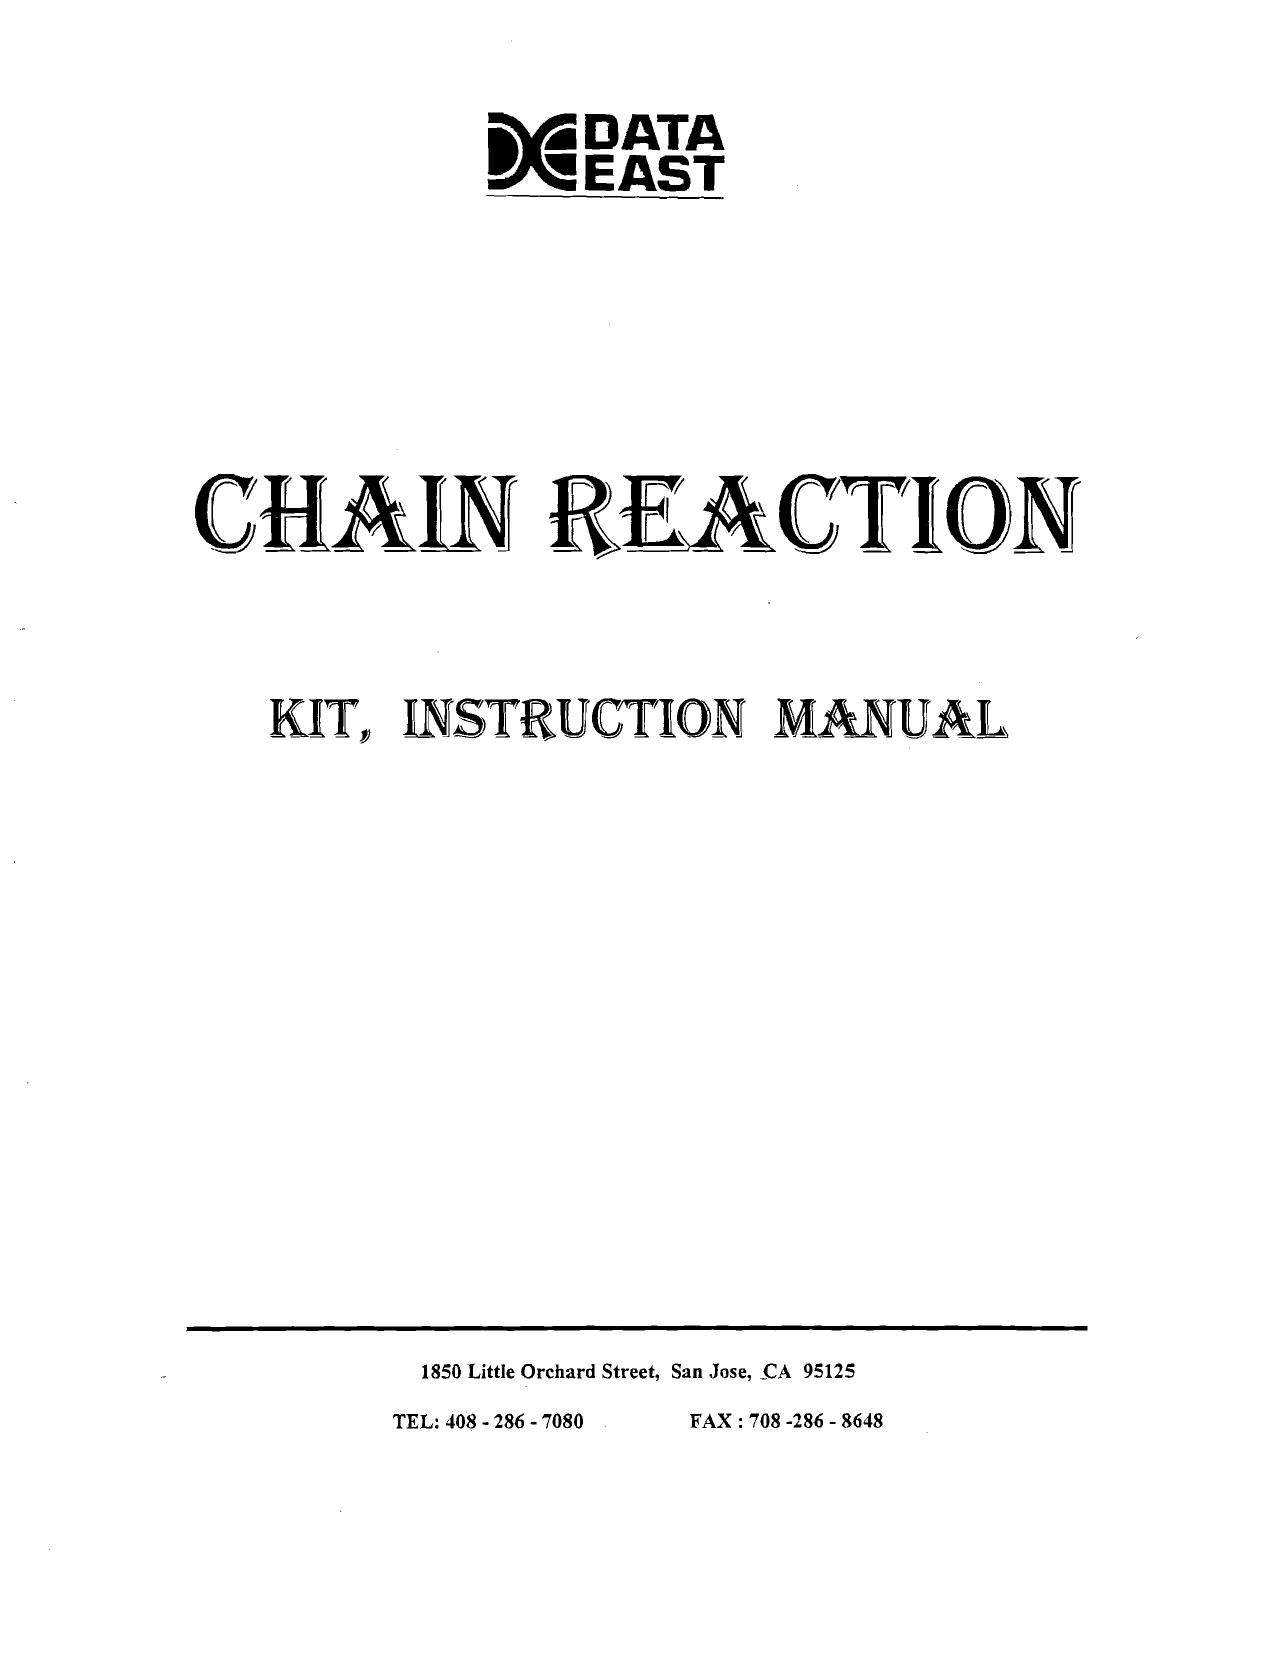 Chain Reaction Kit